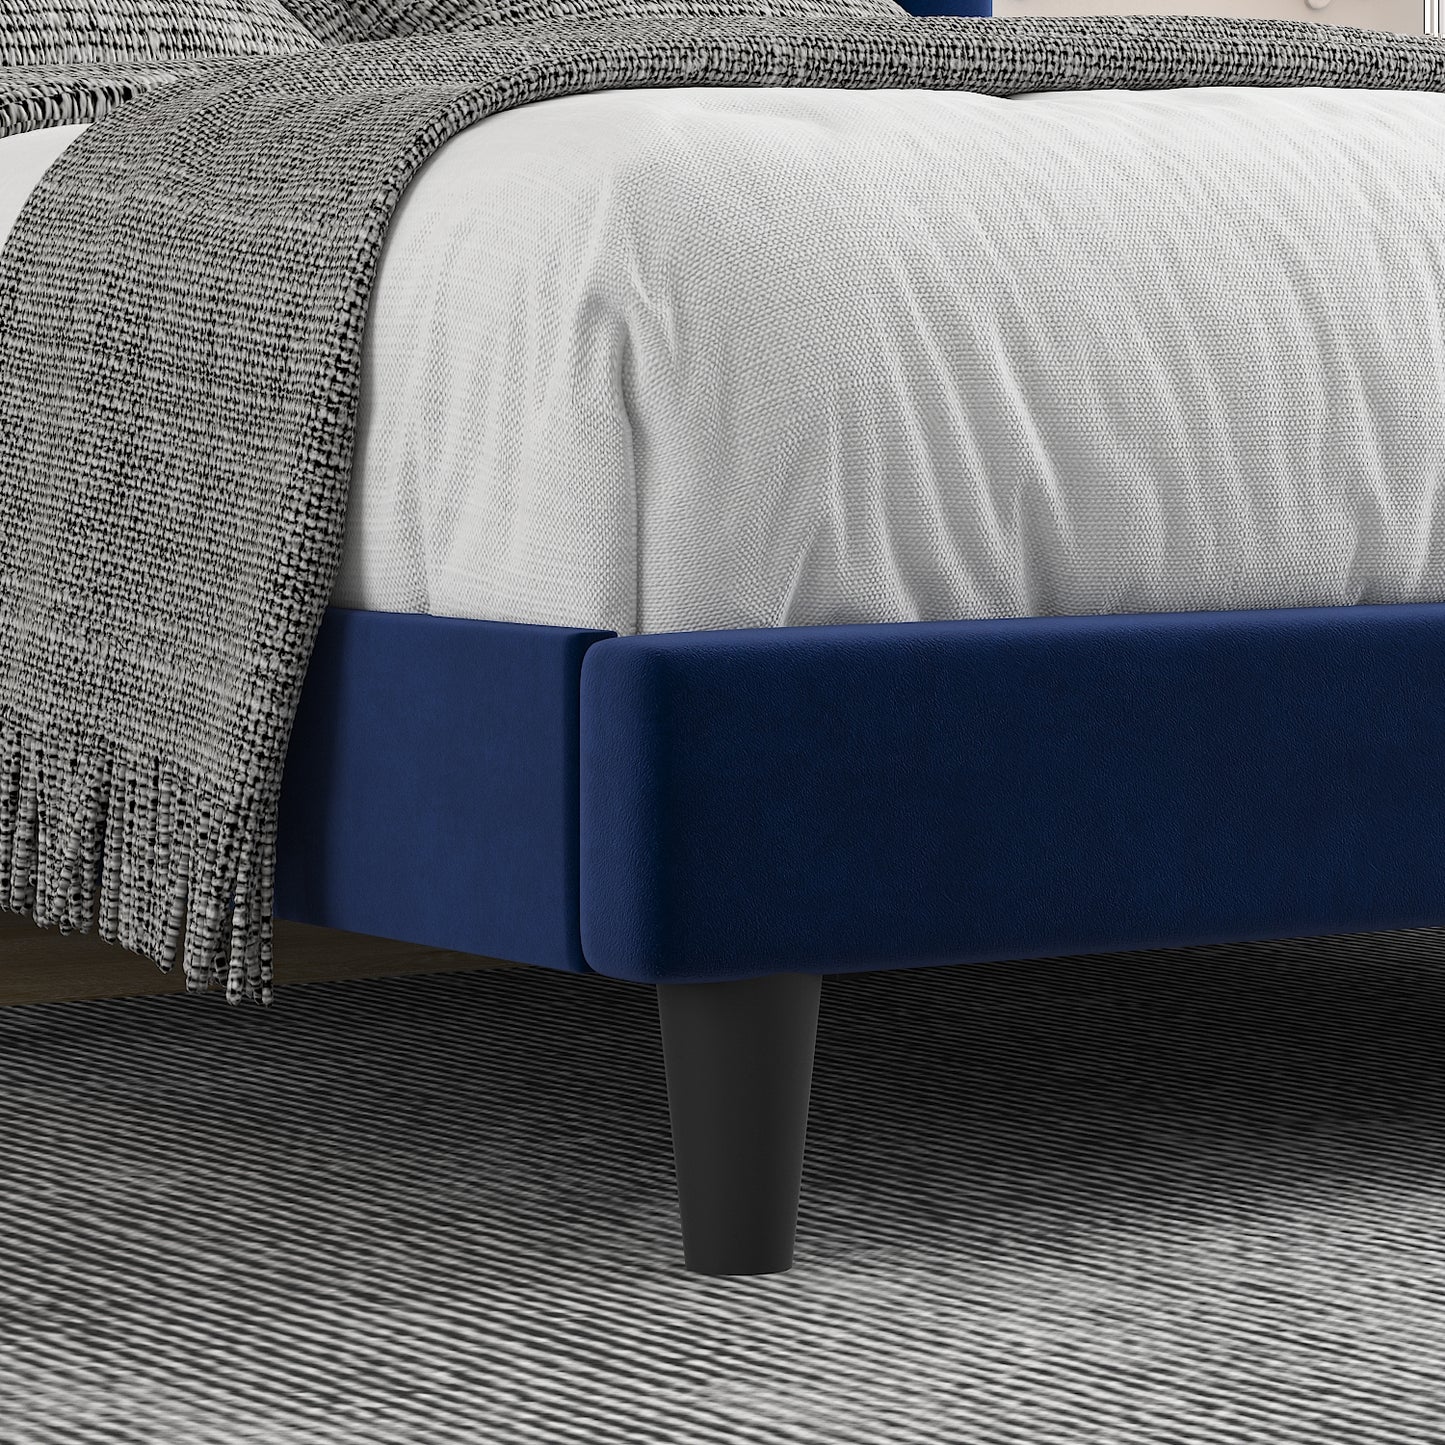 Allewie Velvet Upholstered Bed Frame with Vertical Channel Tufted Headboard, Navy Blue